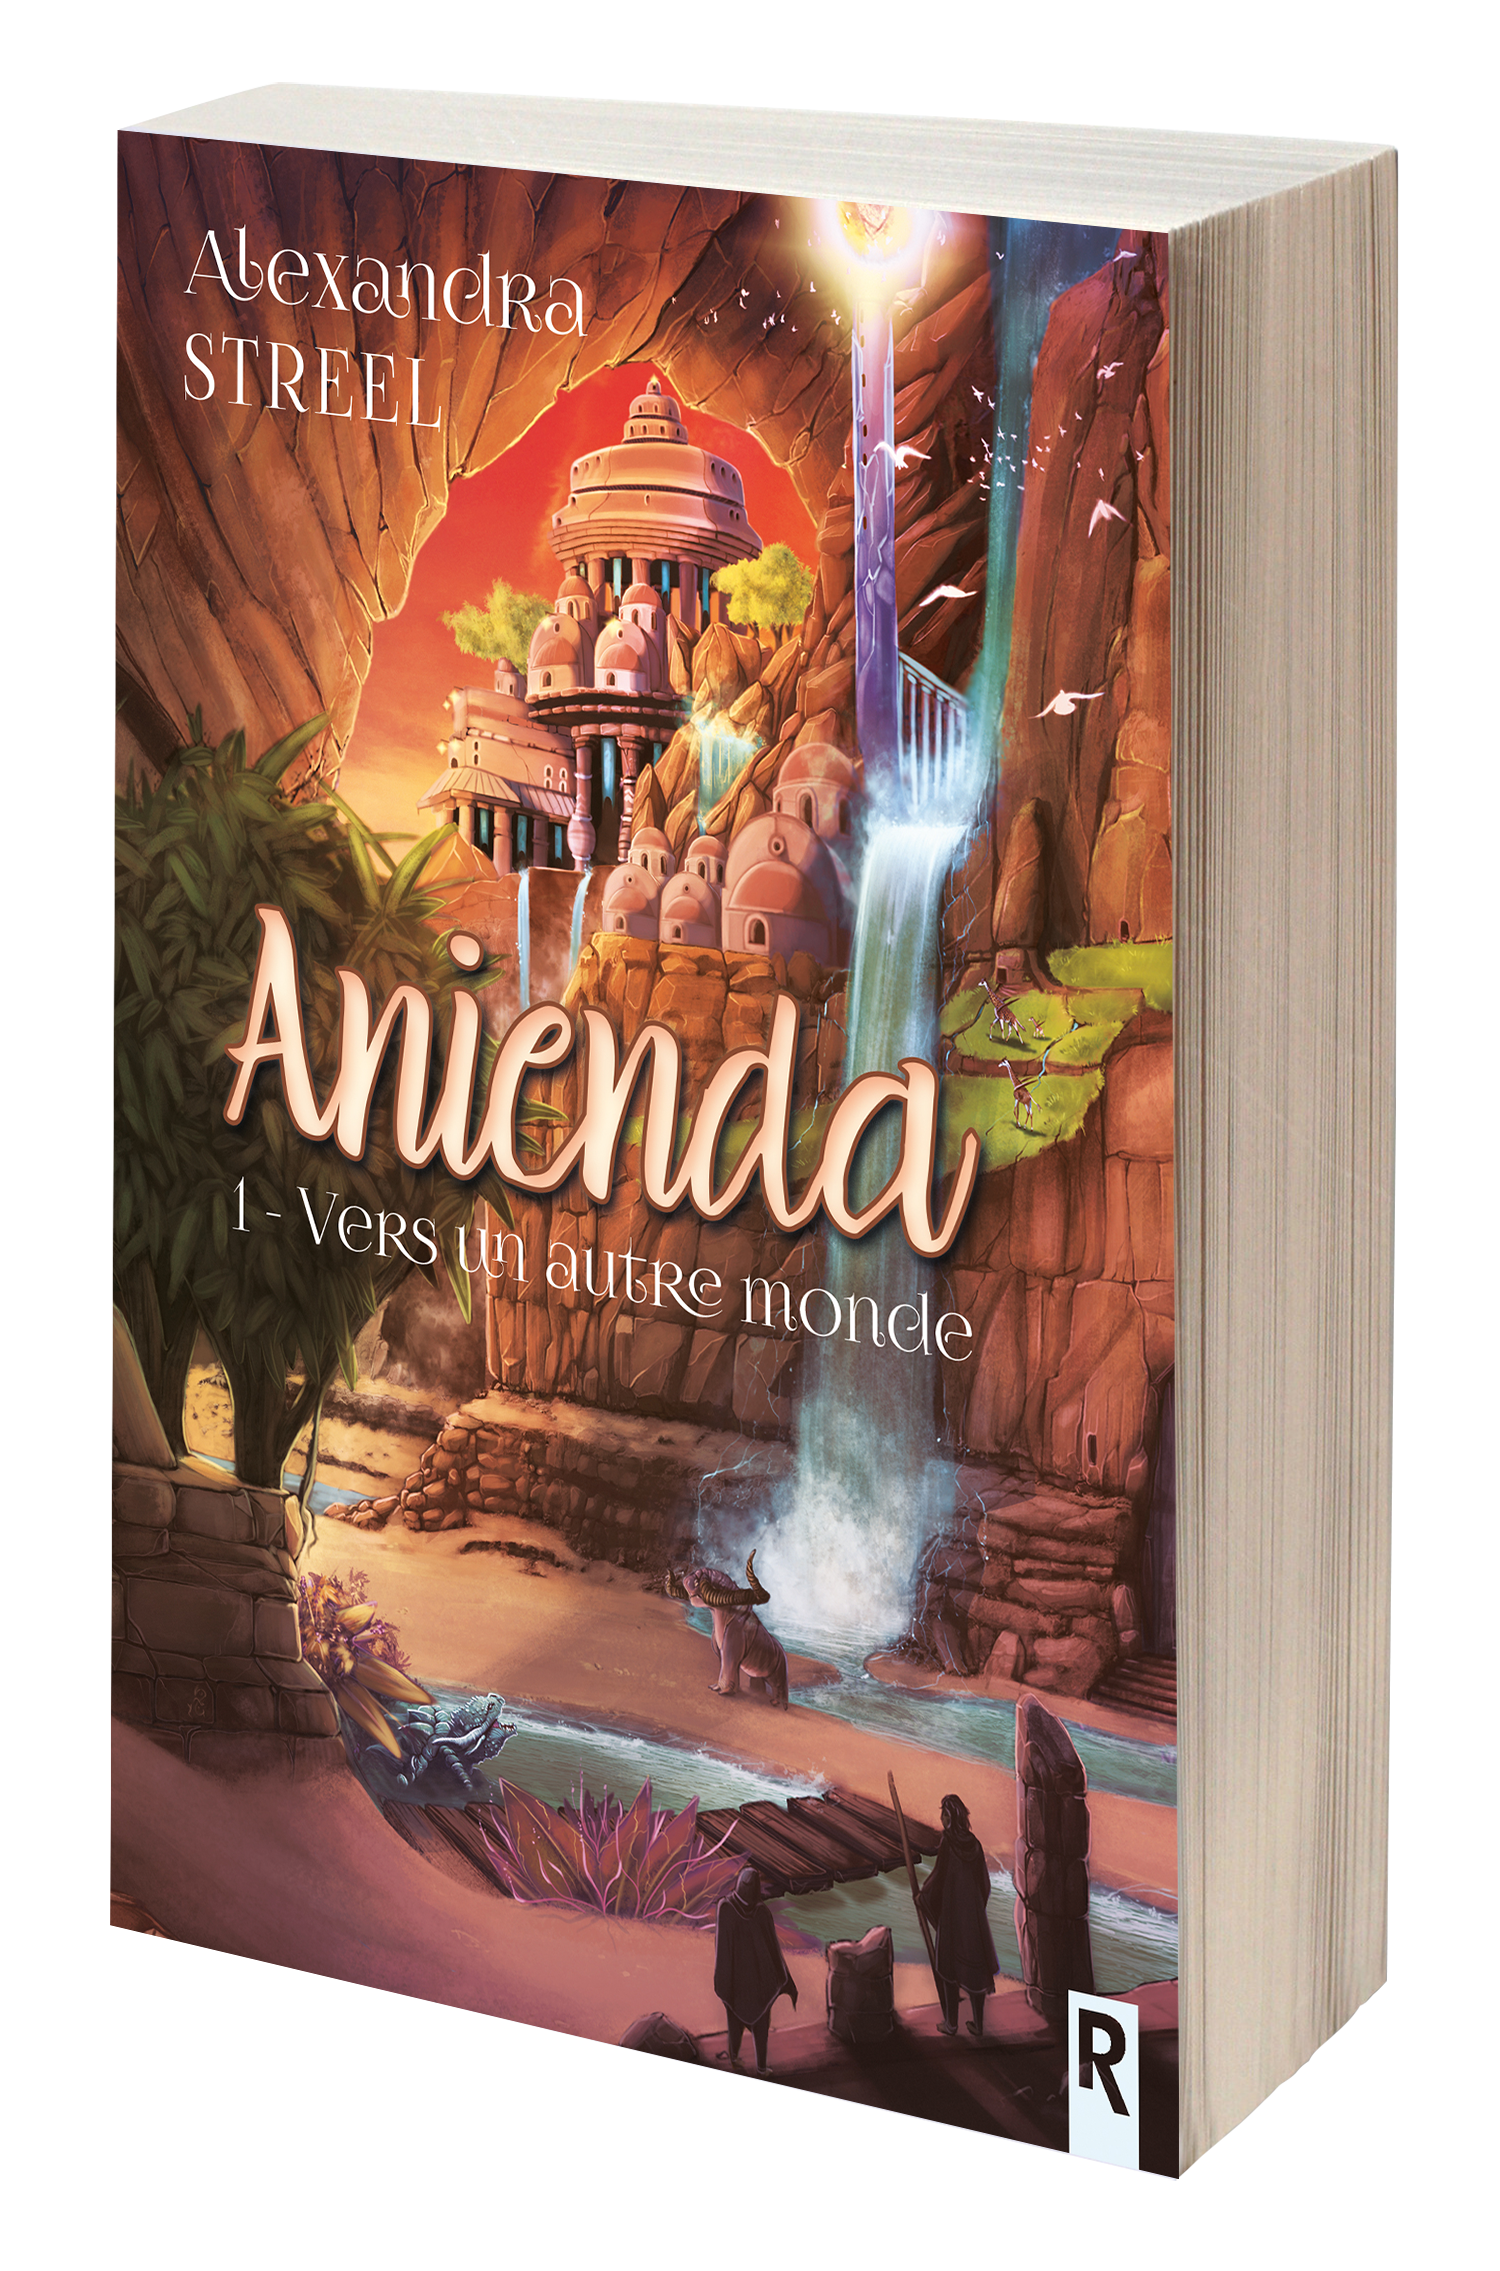 Anienda d'Alexandra Streel, saga fantasy en 4 tomes pour adolescents